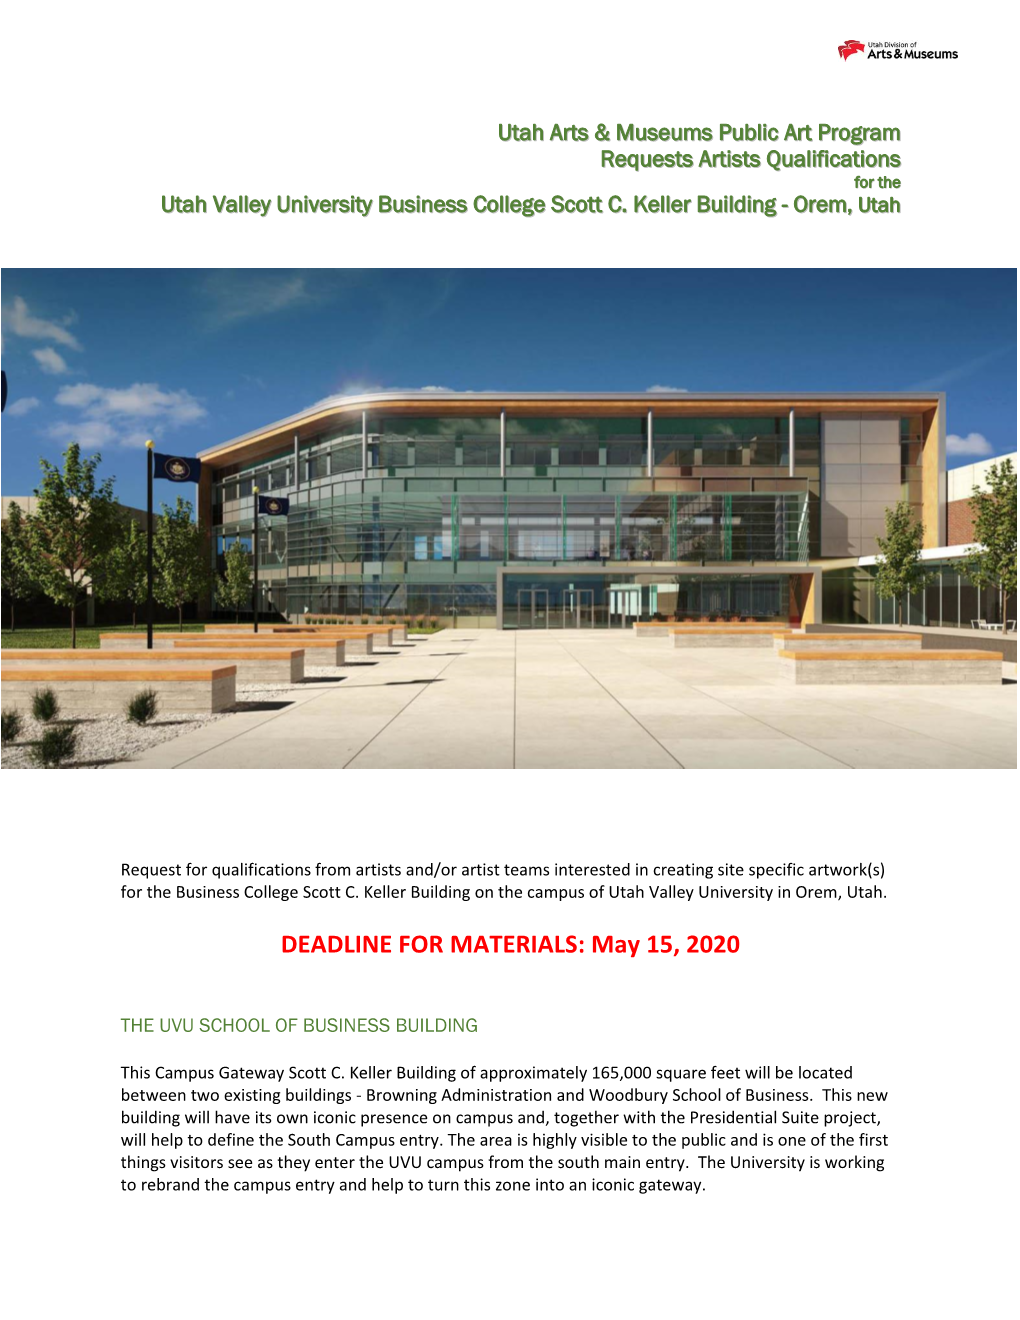 Utah Valley University School of Business